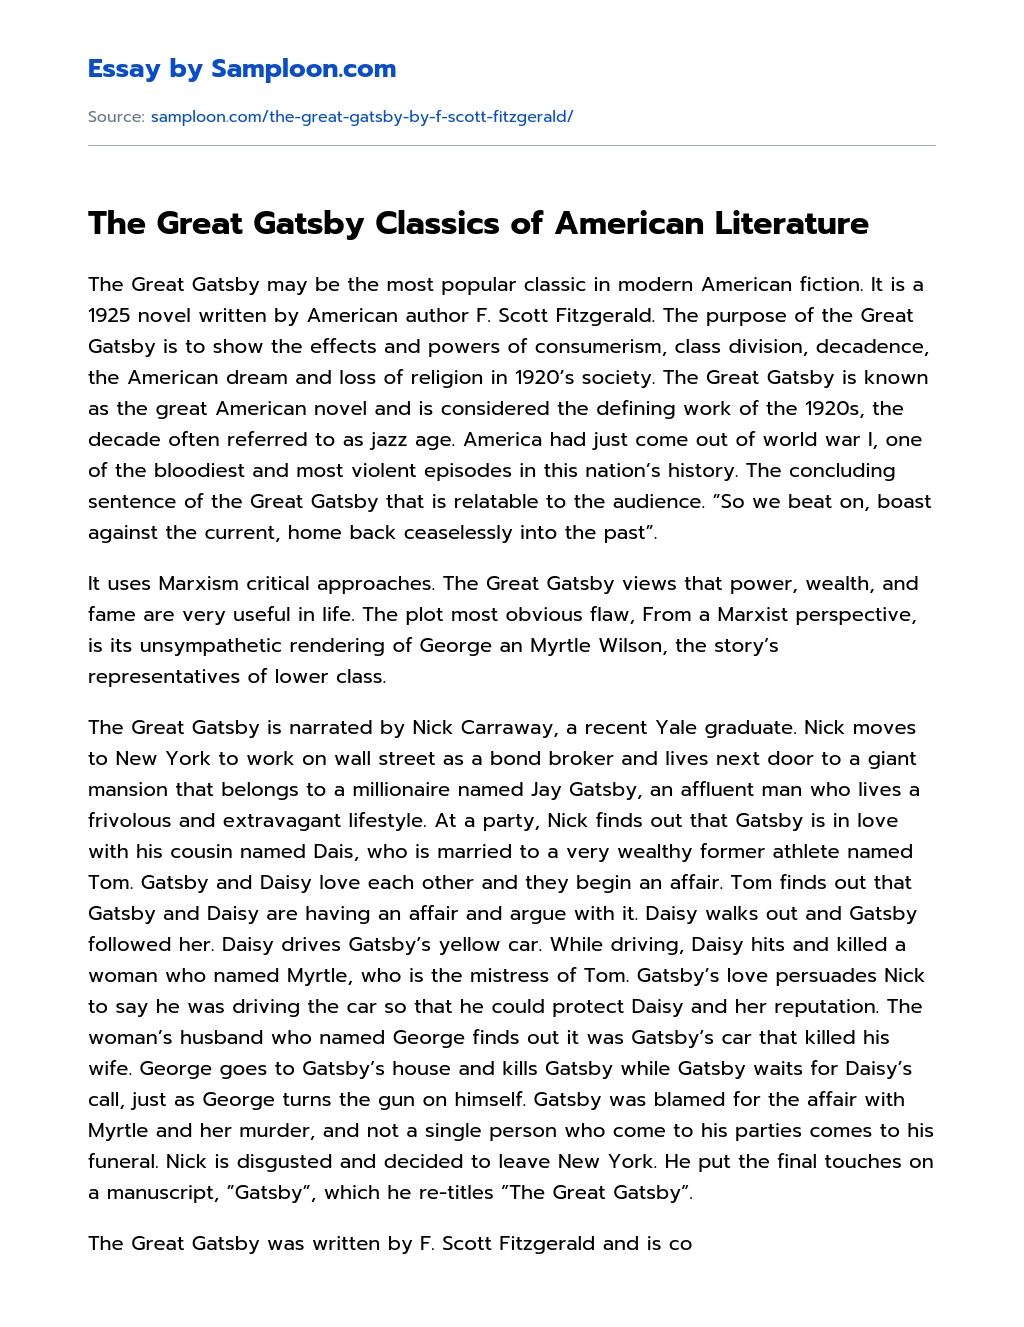 The Great Gatsby Classics of American Literature essay